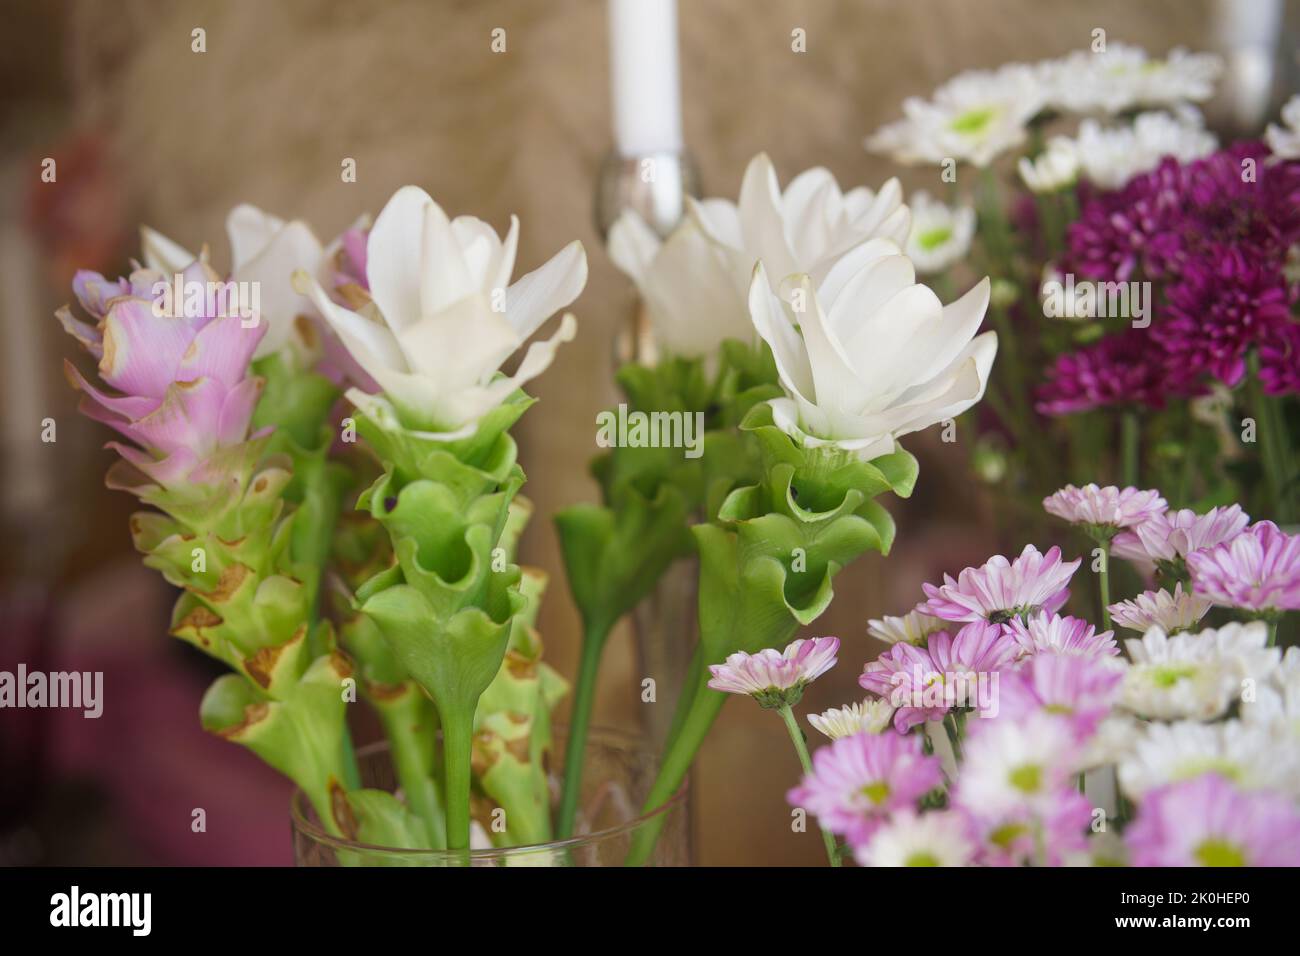 blooming white Siam Tulip chrysanthemum flower decorating in vase Stock Photo